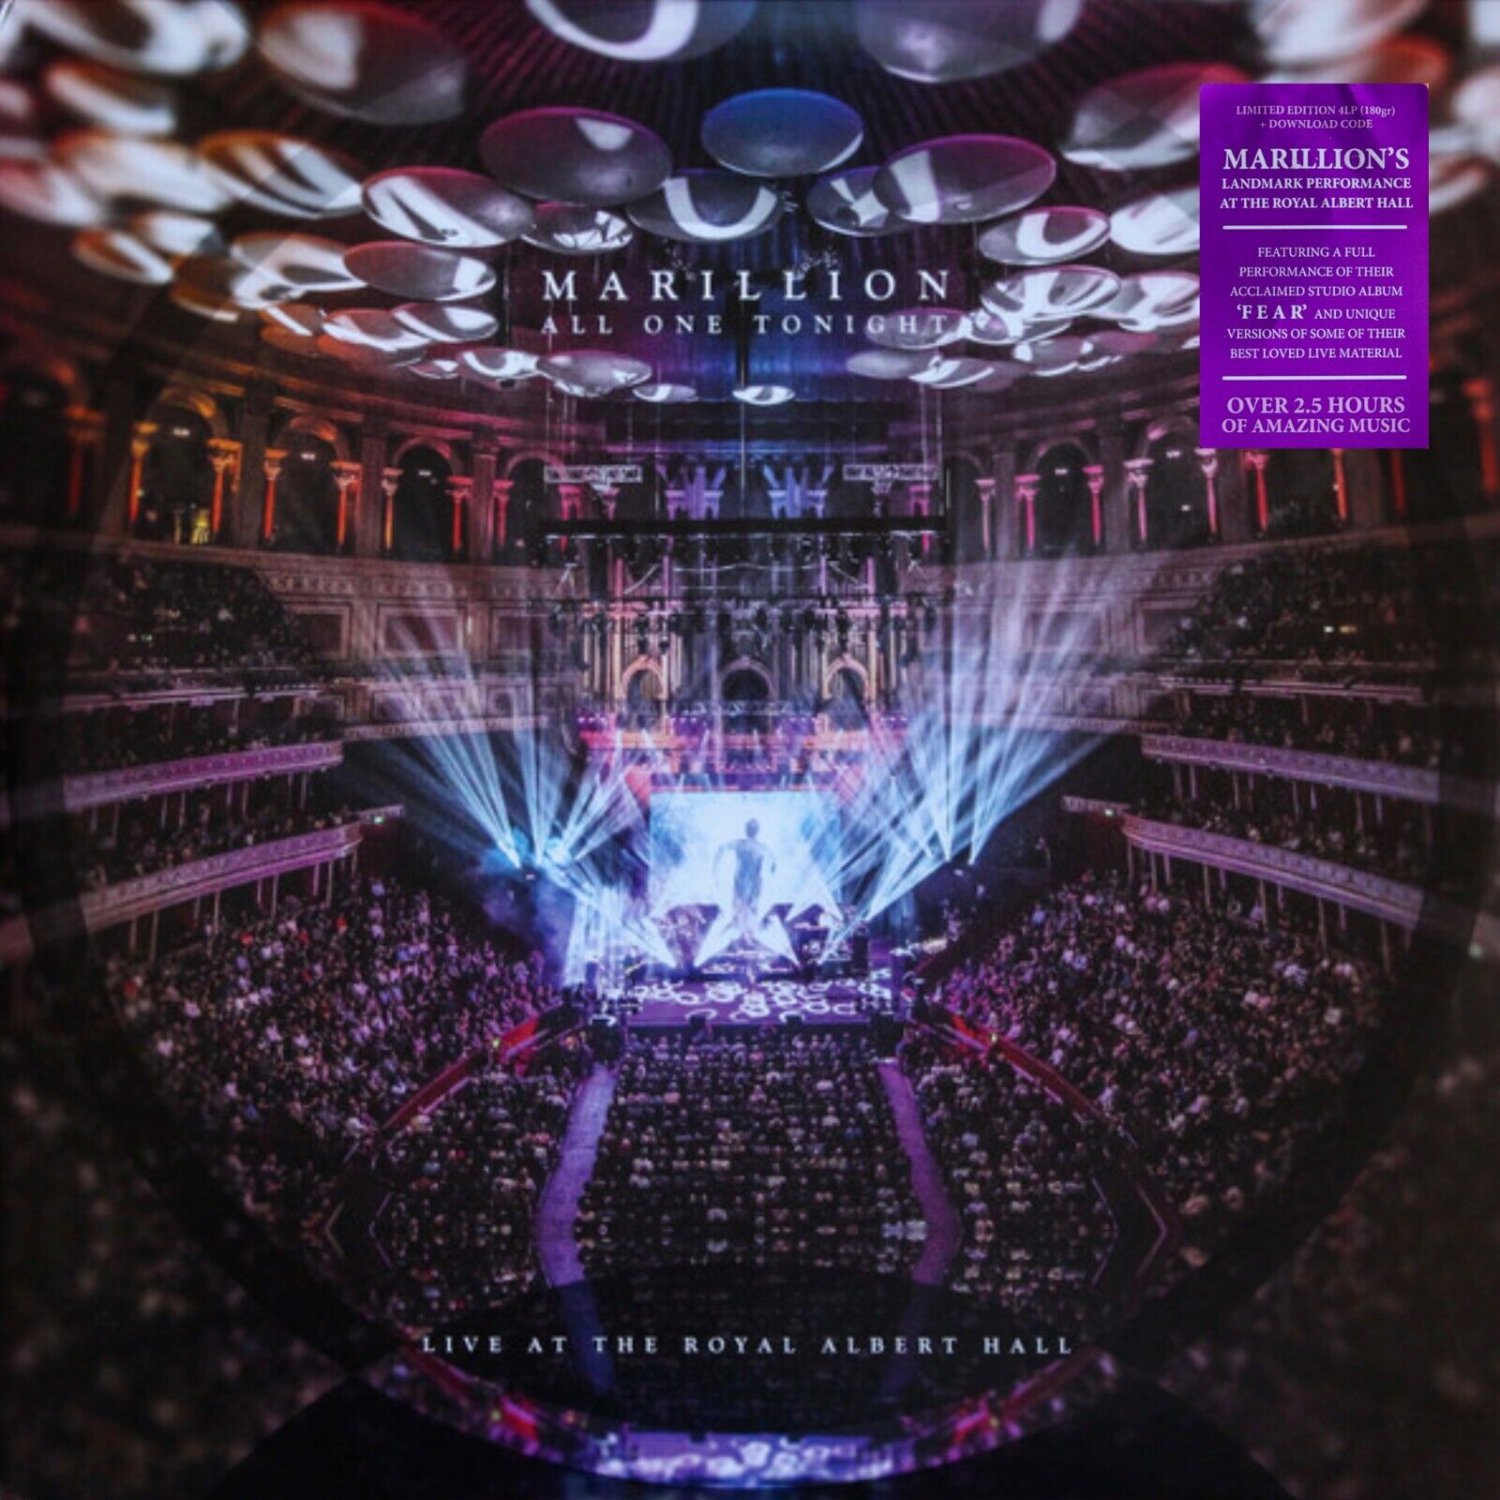 Marillion All One Tonight Vinyl (Live At The Royal Albert Hall) Import 4LPs